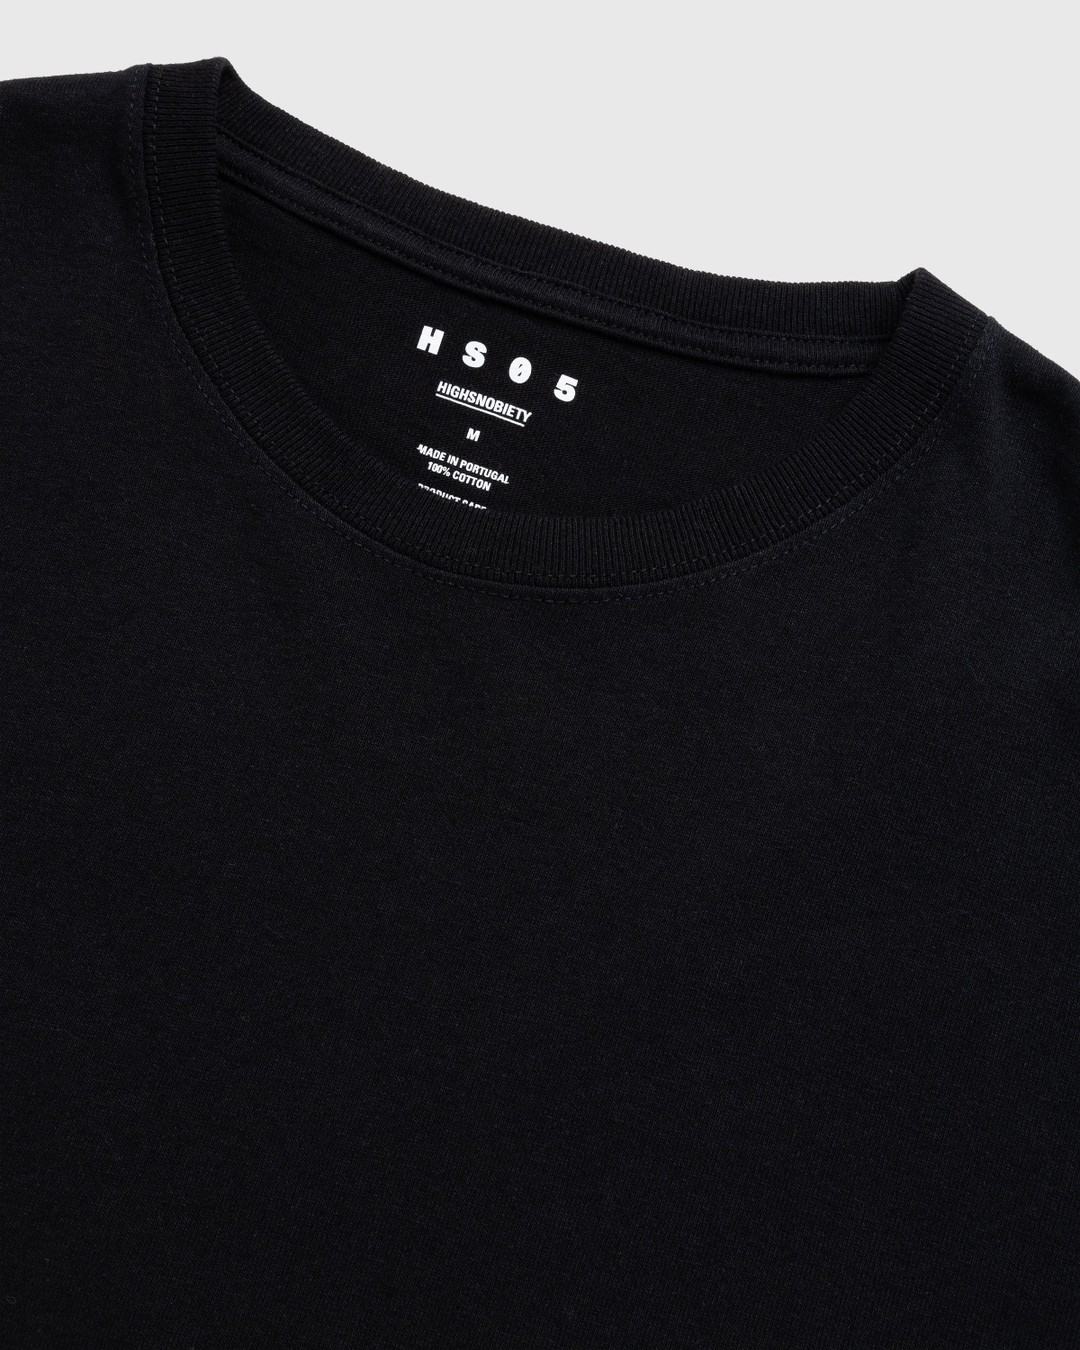 Highsnobiety HS05 – 3 Pack T-Shirts Black - T-shirts - Black - Image 6